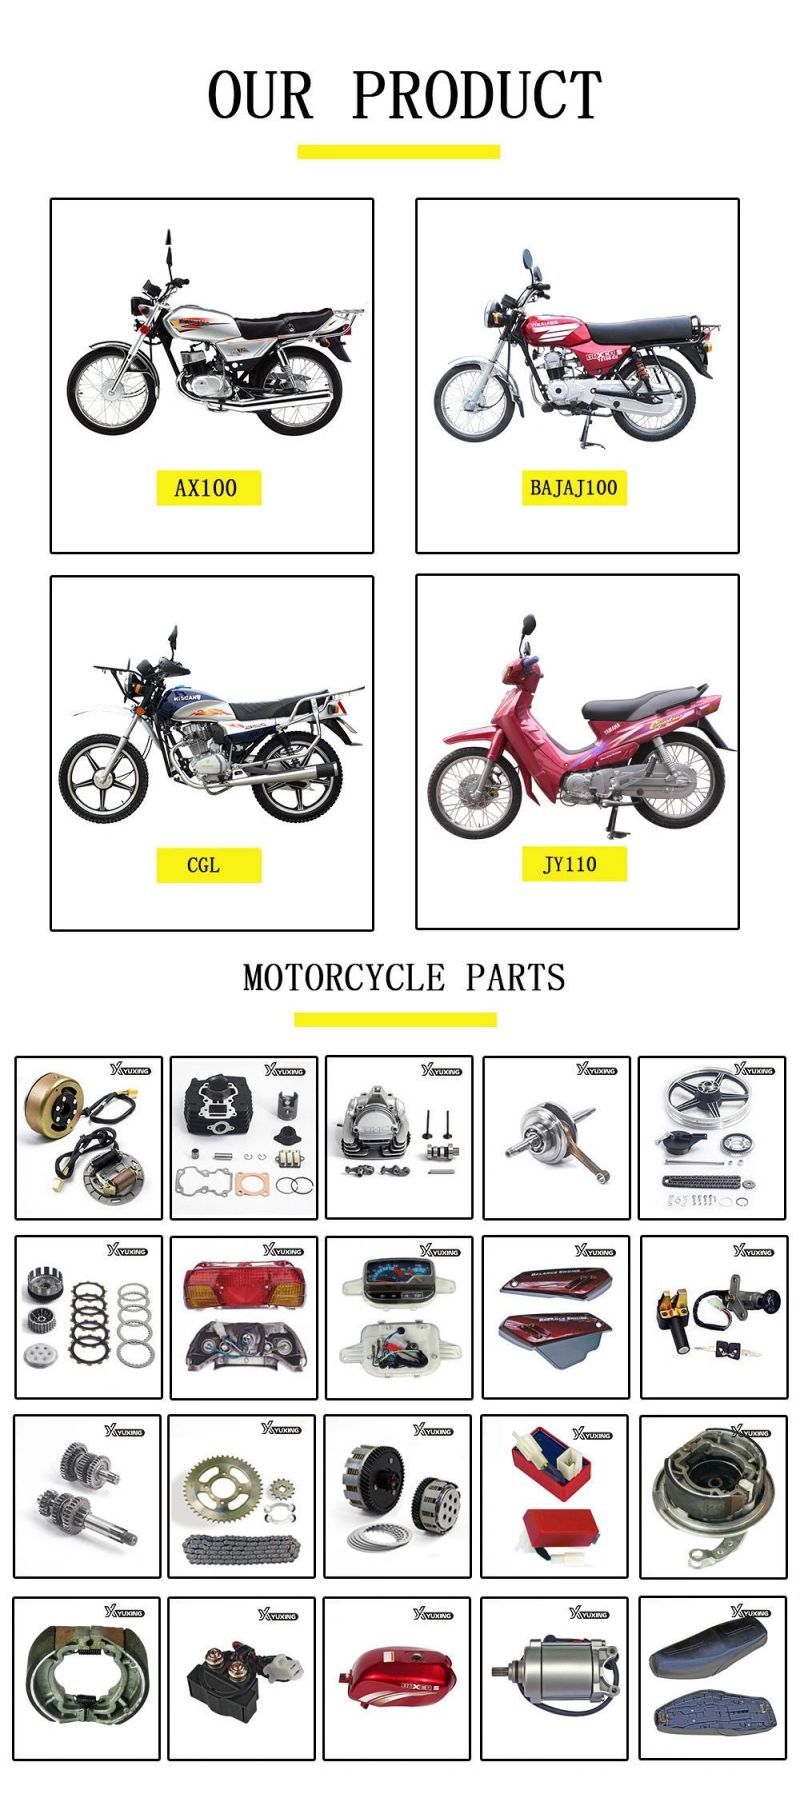 Yuxing Motorcycle Part Starter Motor Motorcycle Engine Starter Motor Accessories